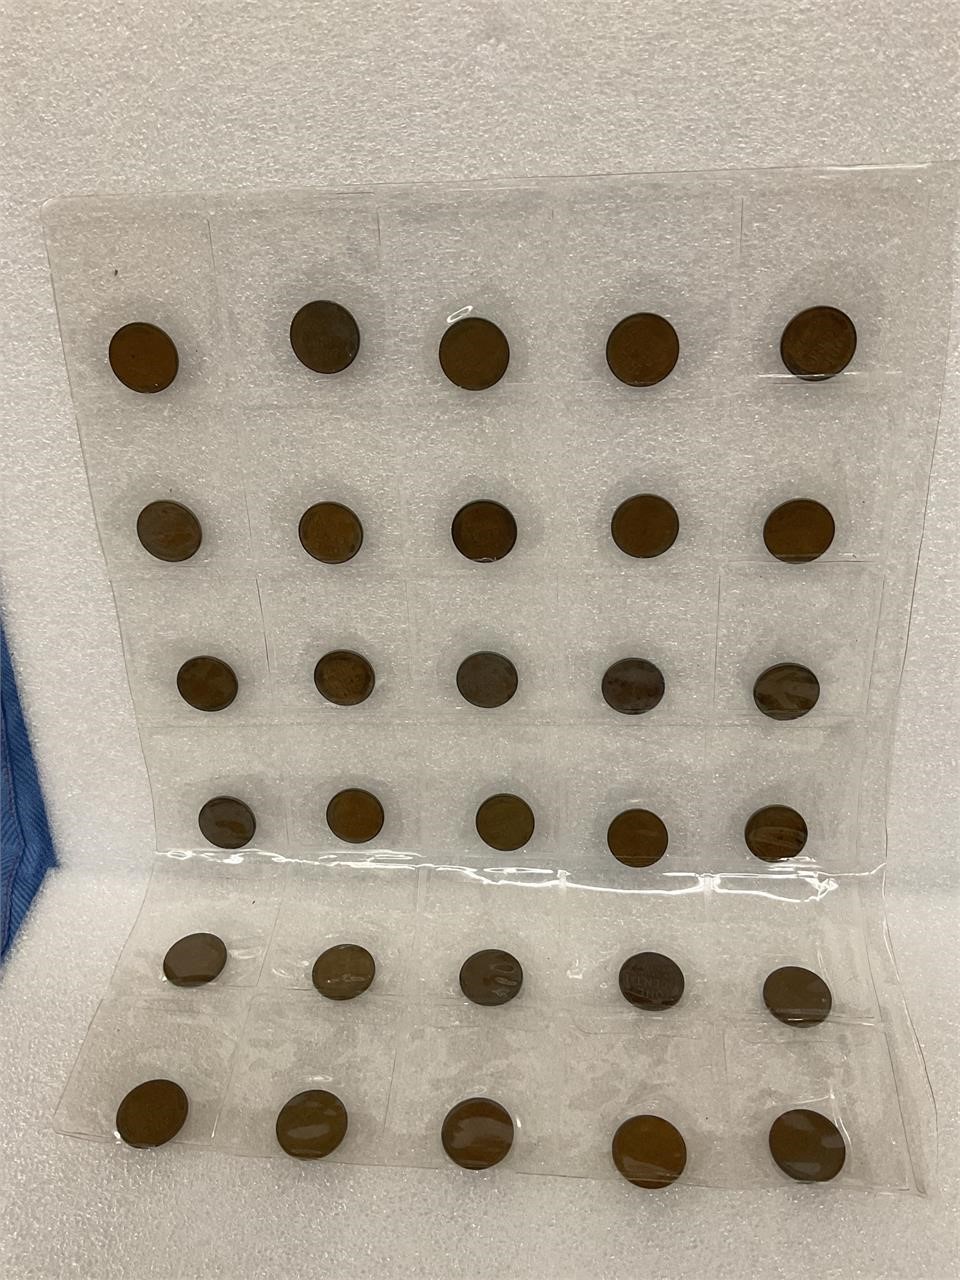 Assorted pennies